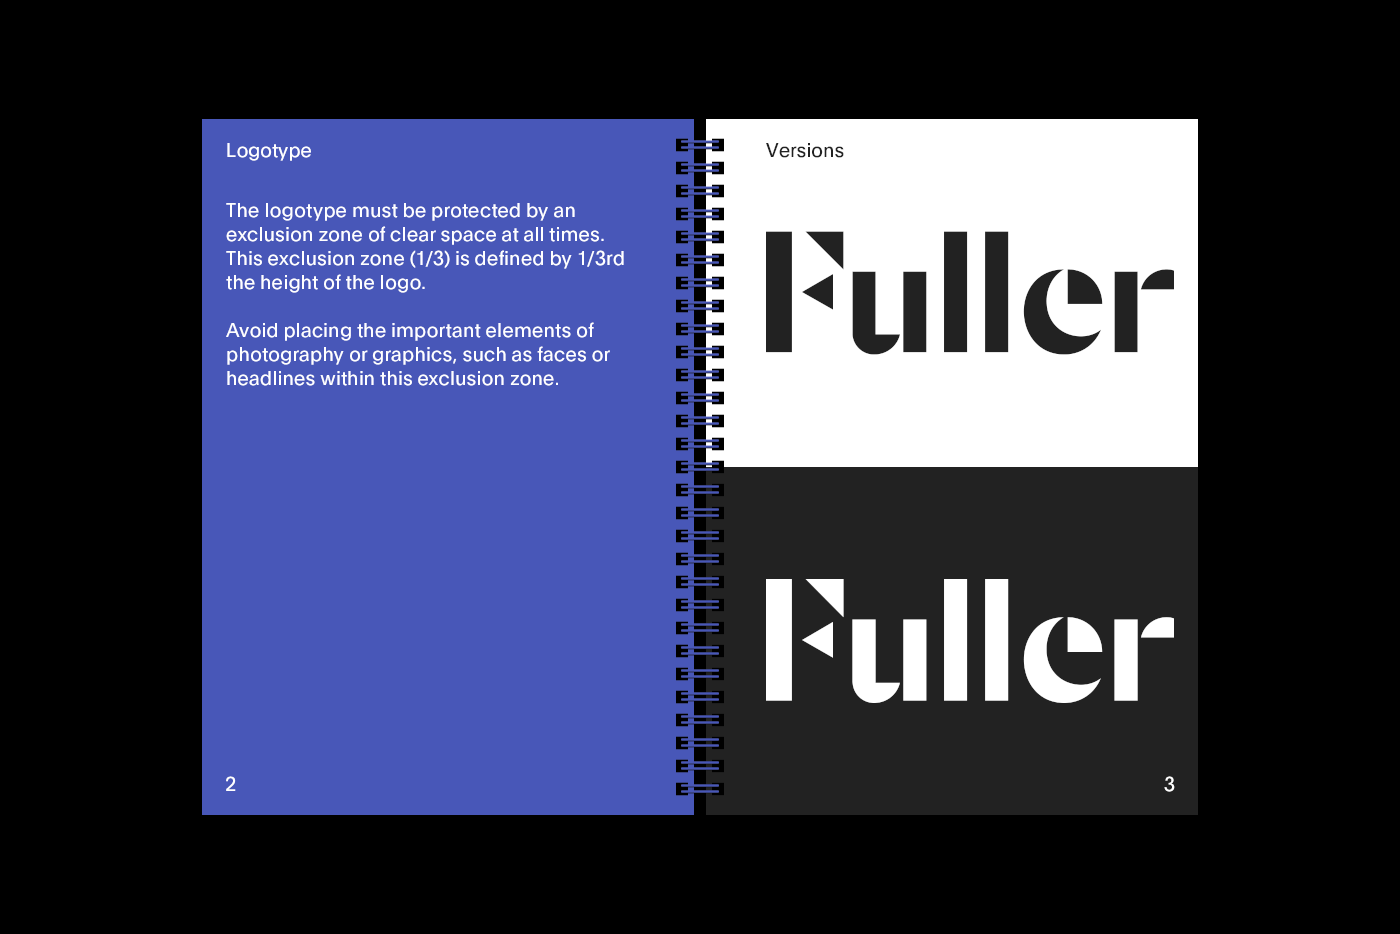 black and white business card geometric guidelines icons minimalist modern Plain Signage wayfinding